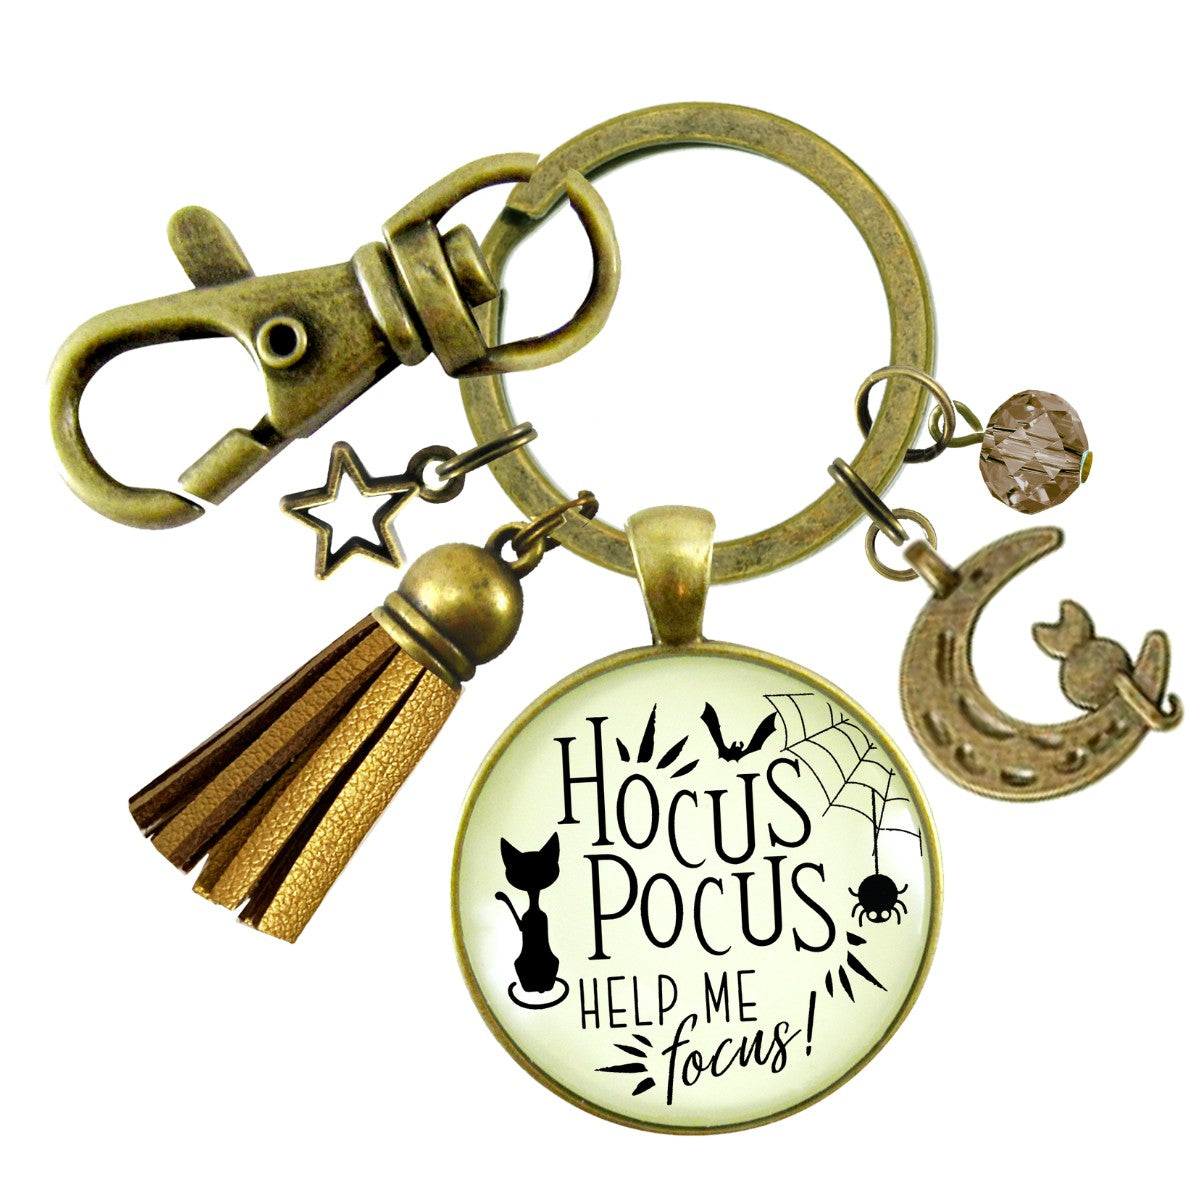 Hocus Pocus Keychain Help Me Focus Funny Halloween Spider Black Cat Jewelry for Women Costume Fashion Book Charm  Keychain - Women - Gutsy Goodness Handmade Jewelry